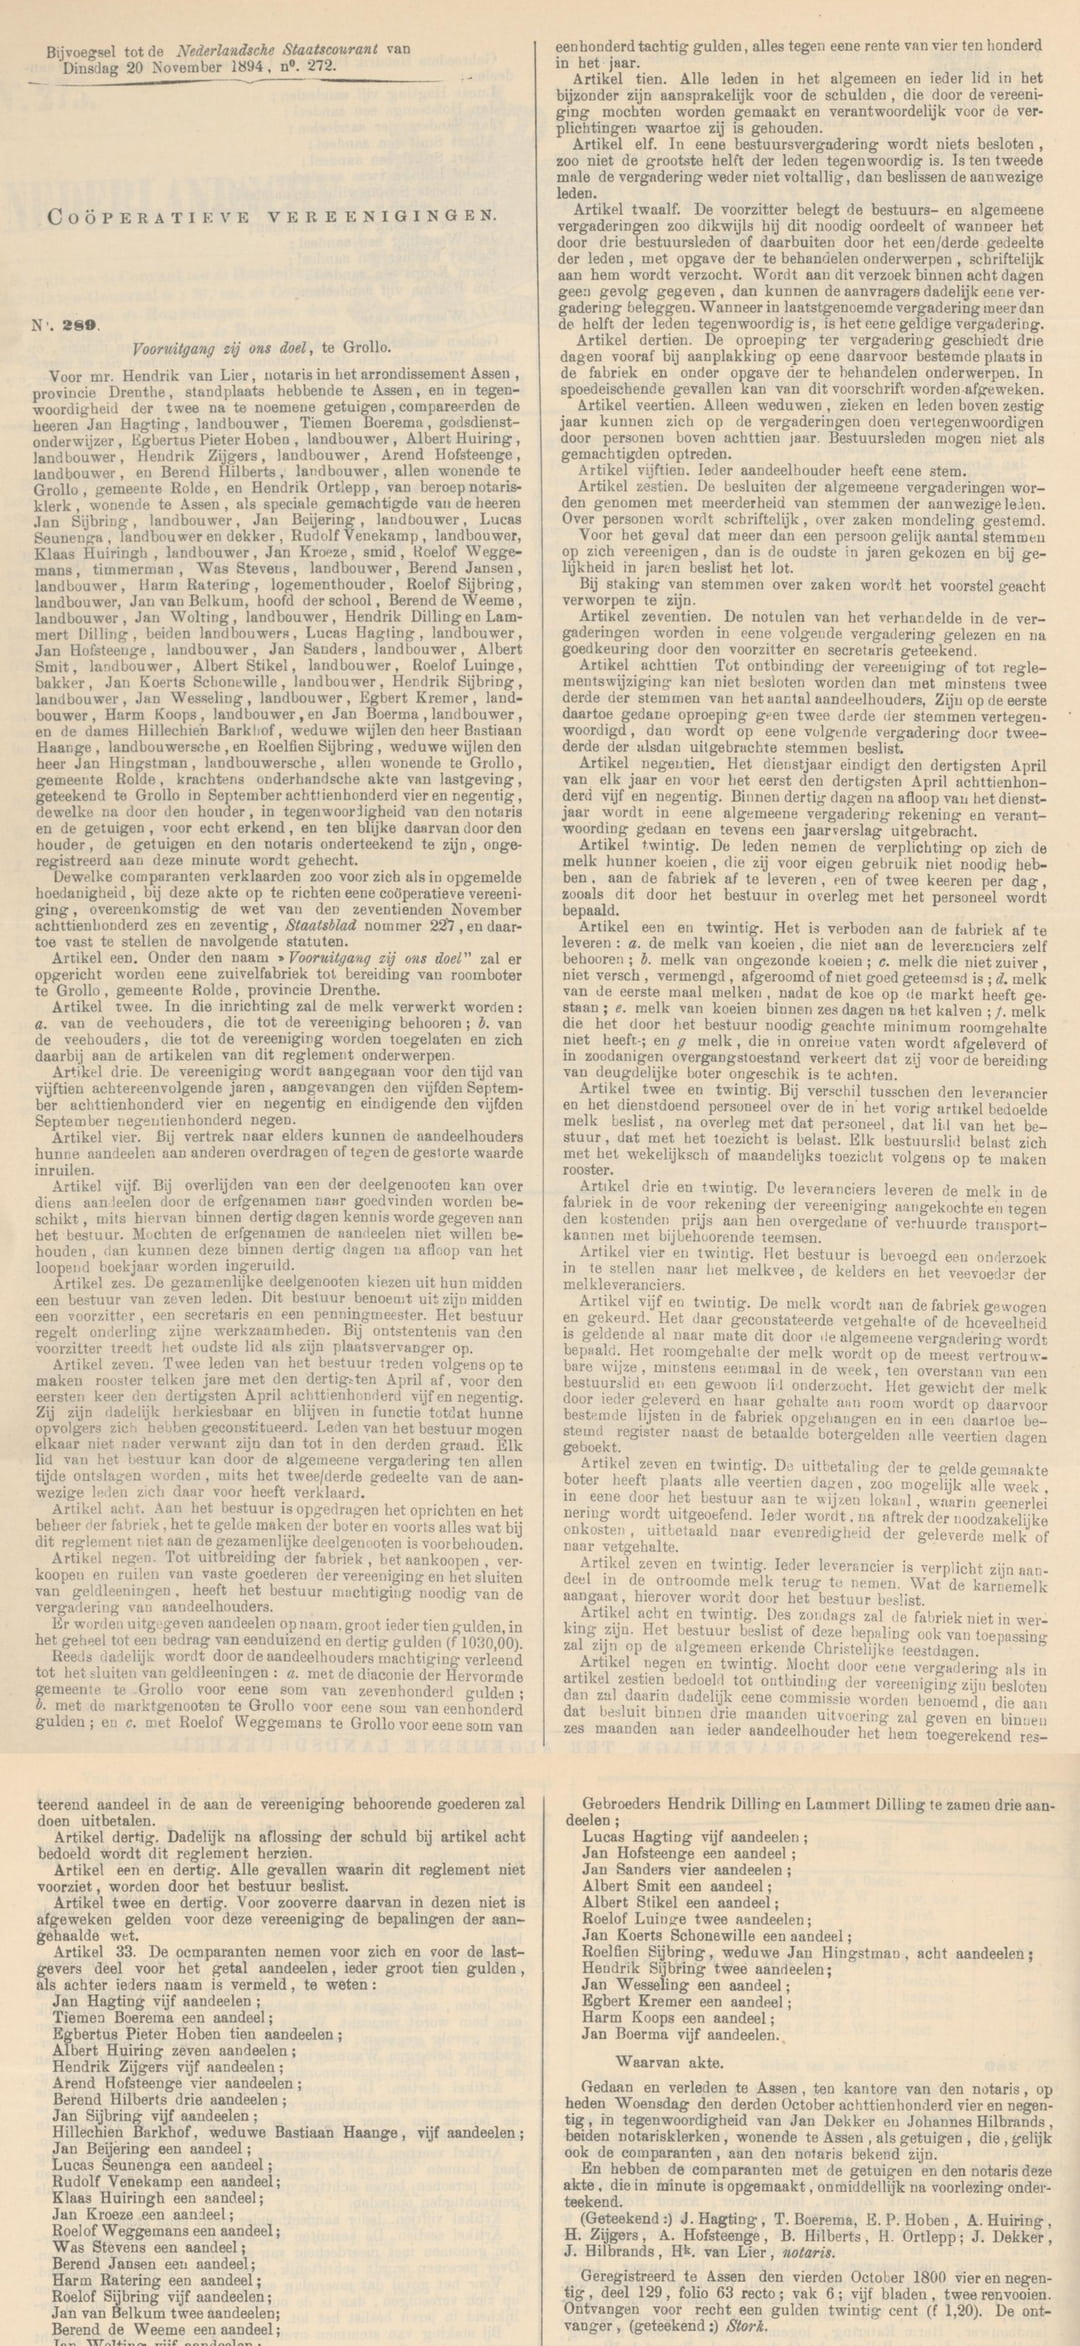 18941120-krant-Staatscourant-oprichting VZOD-samengesteld